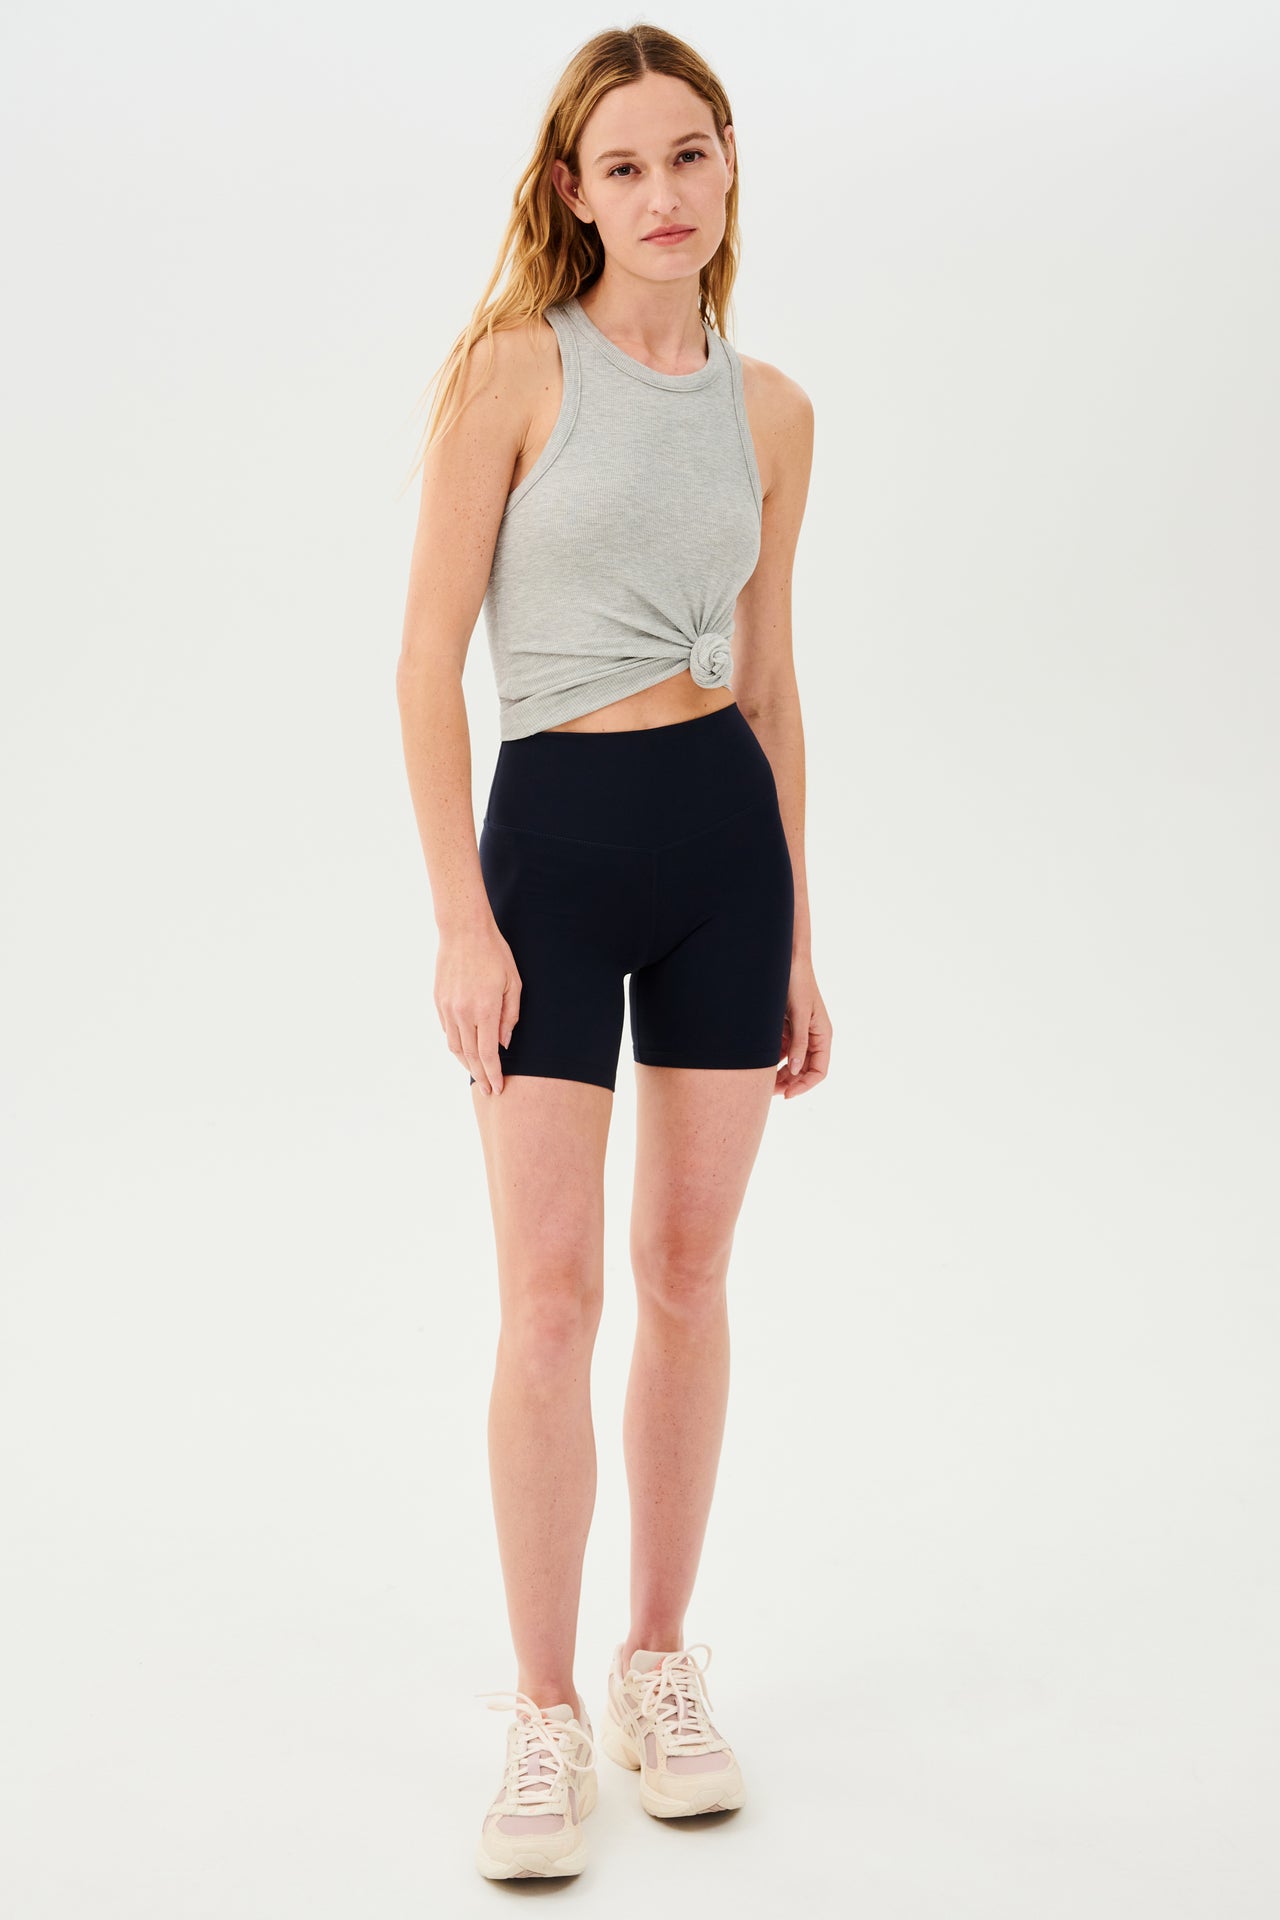 The model is wearing a SPLITS59 Kiki Rib Tank Full Length in Heather Grey and black shorts.